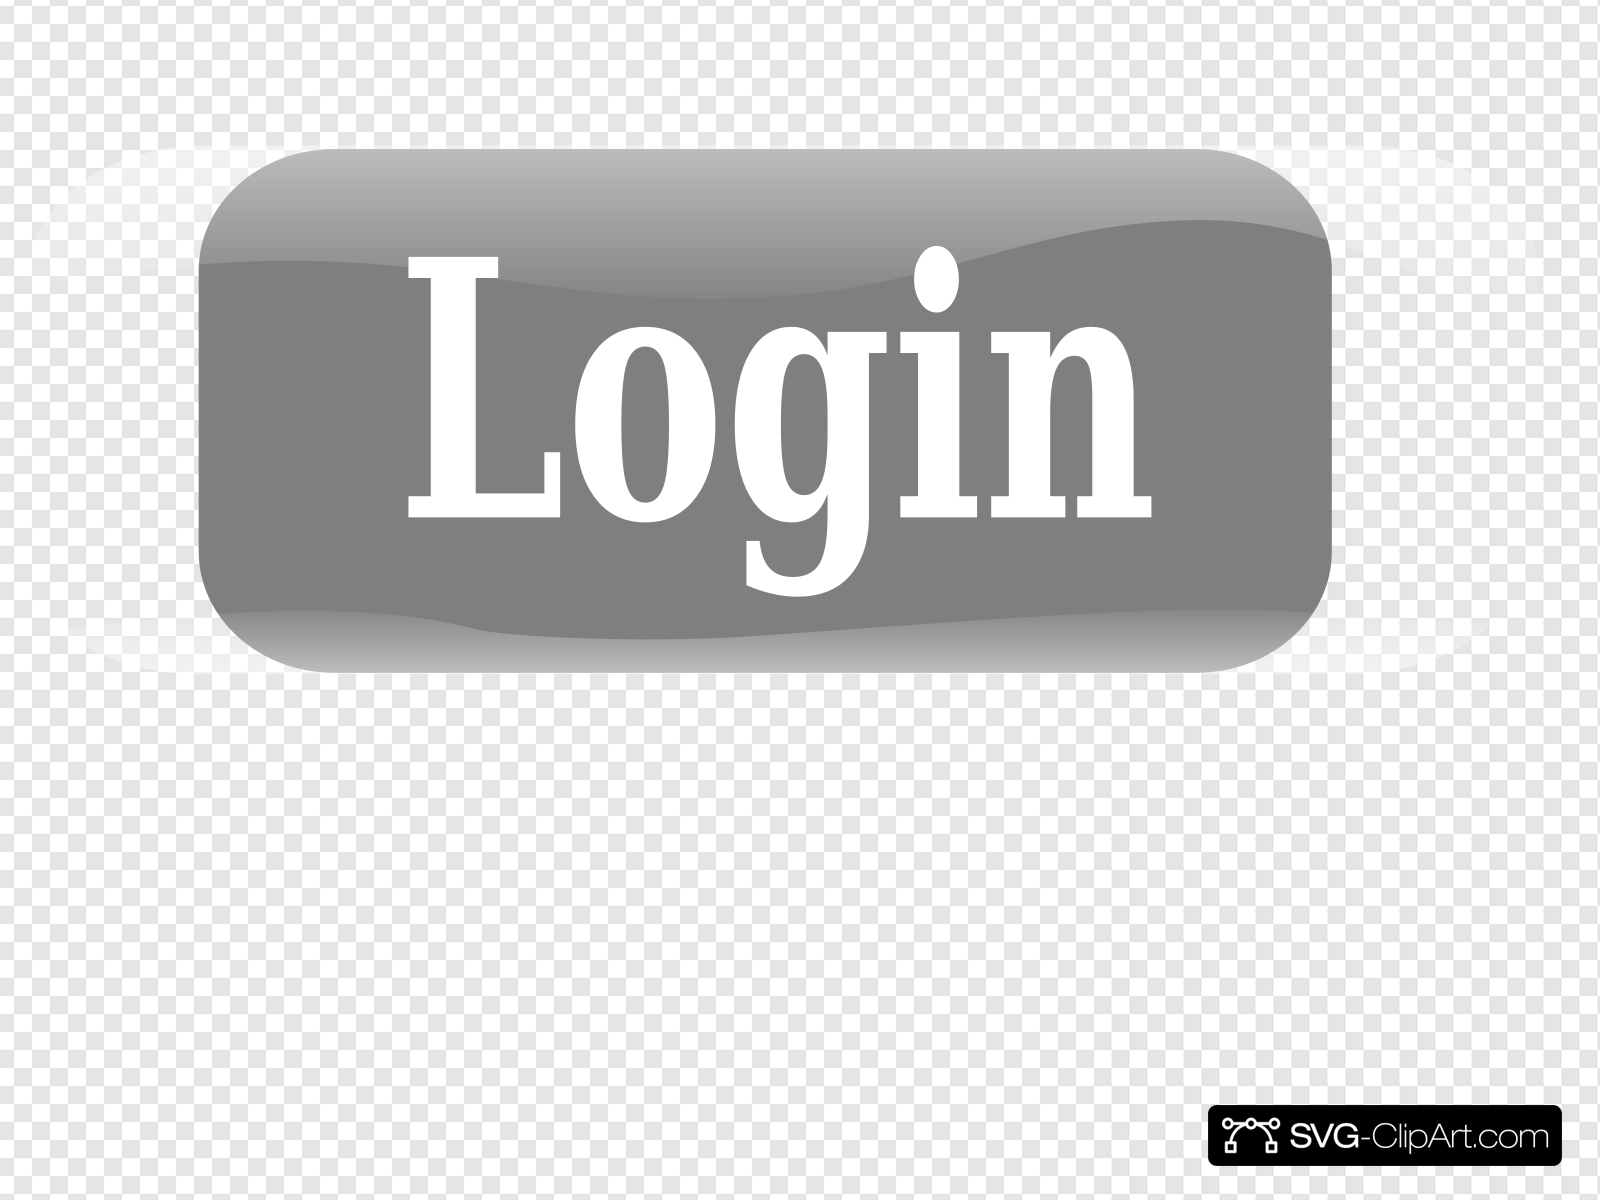 New Login Button Clip art, Icon and SVG